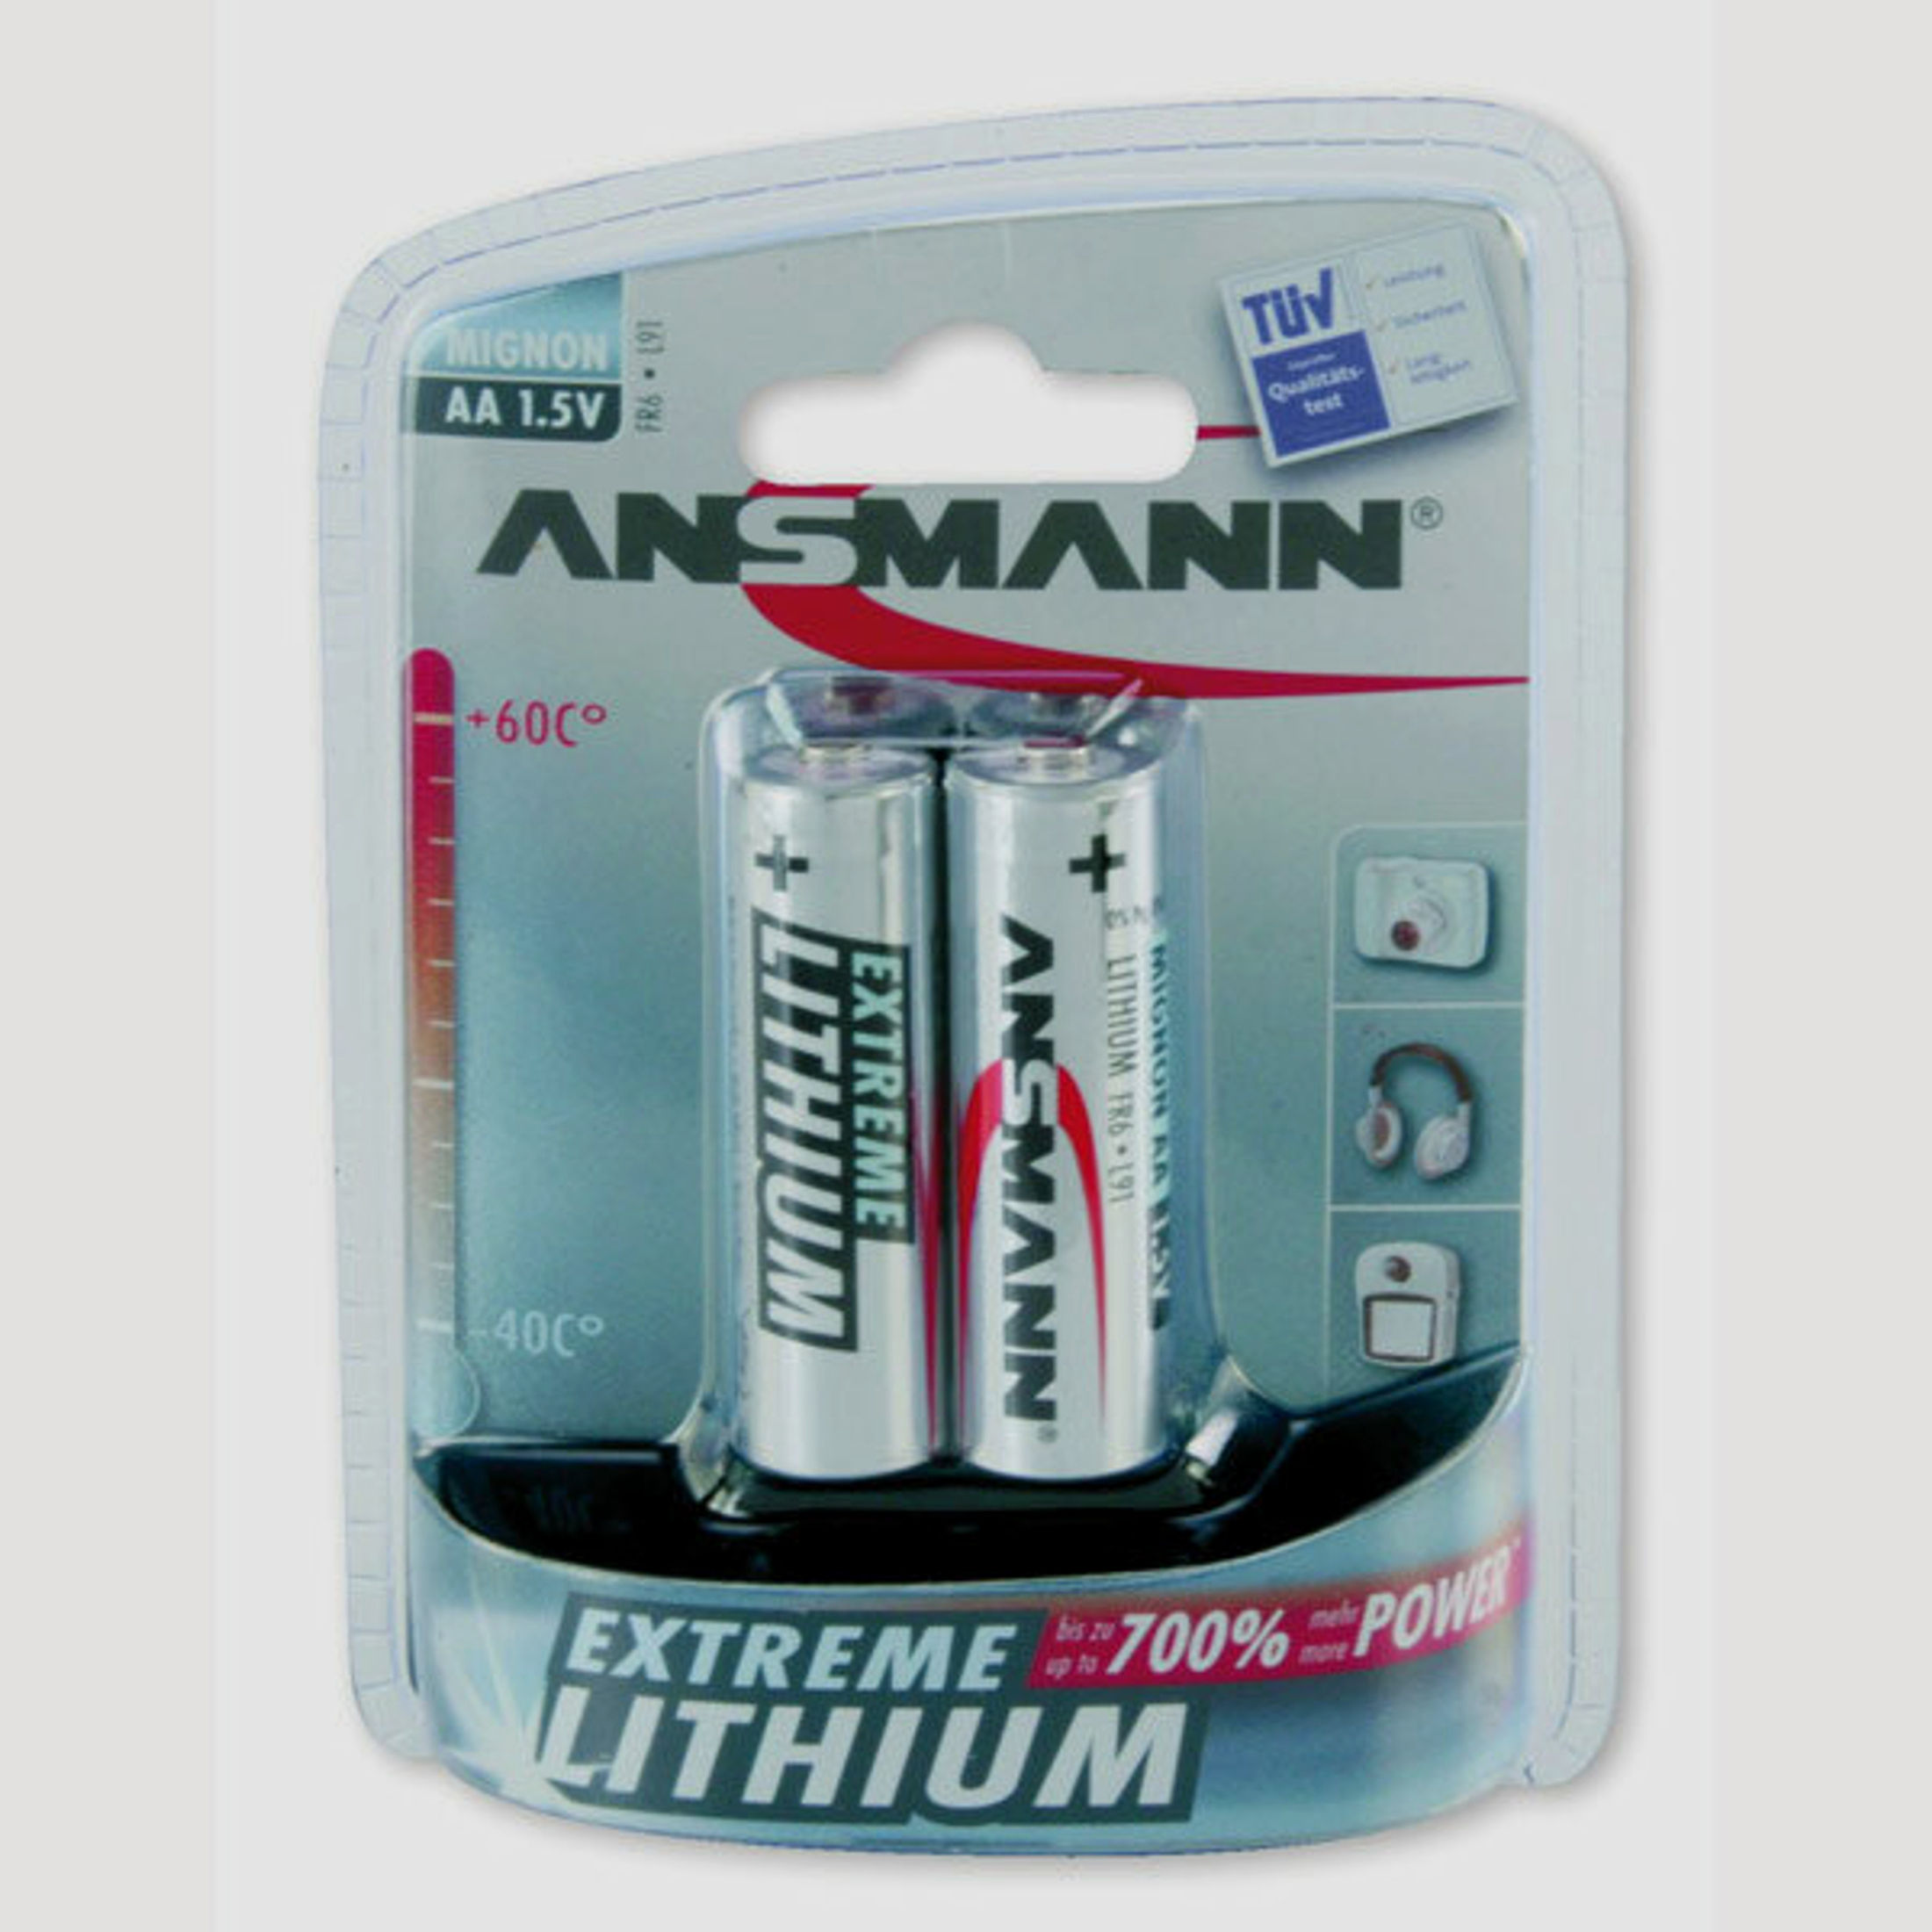 2 x Ansmann Extreme Lithium Batterie 1,5 V Mignon AA